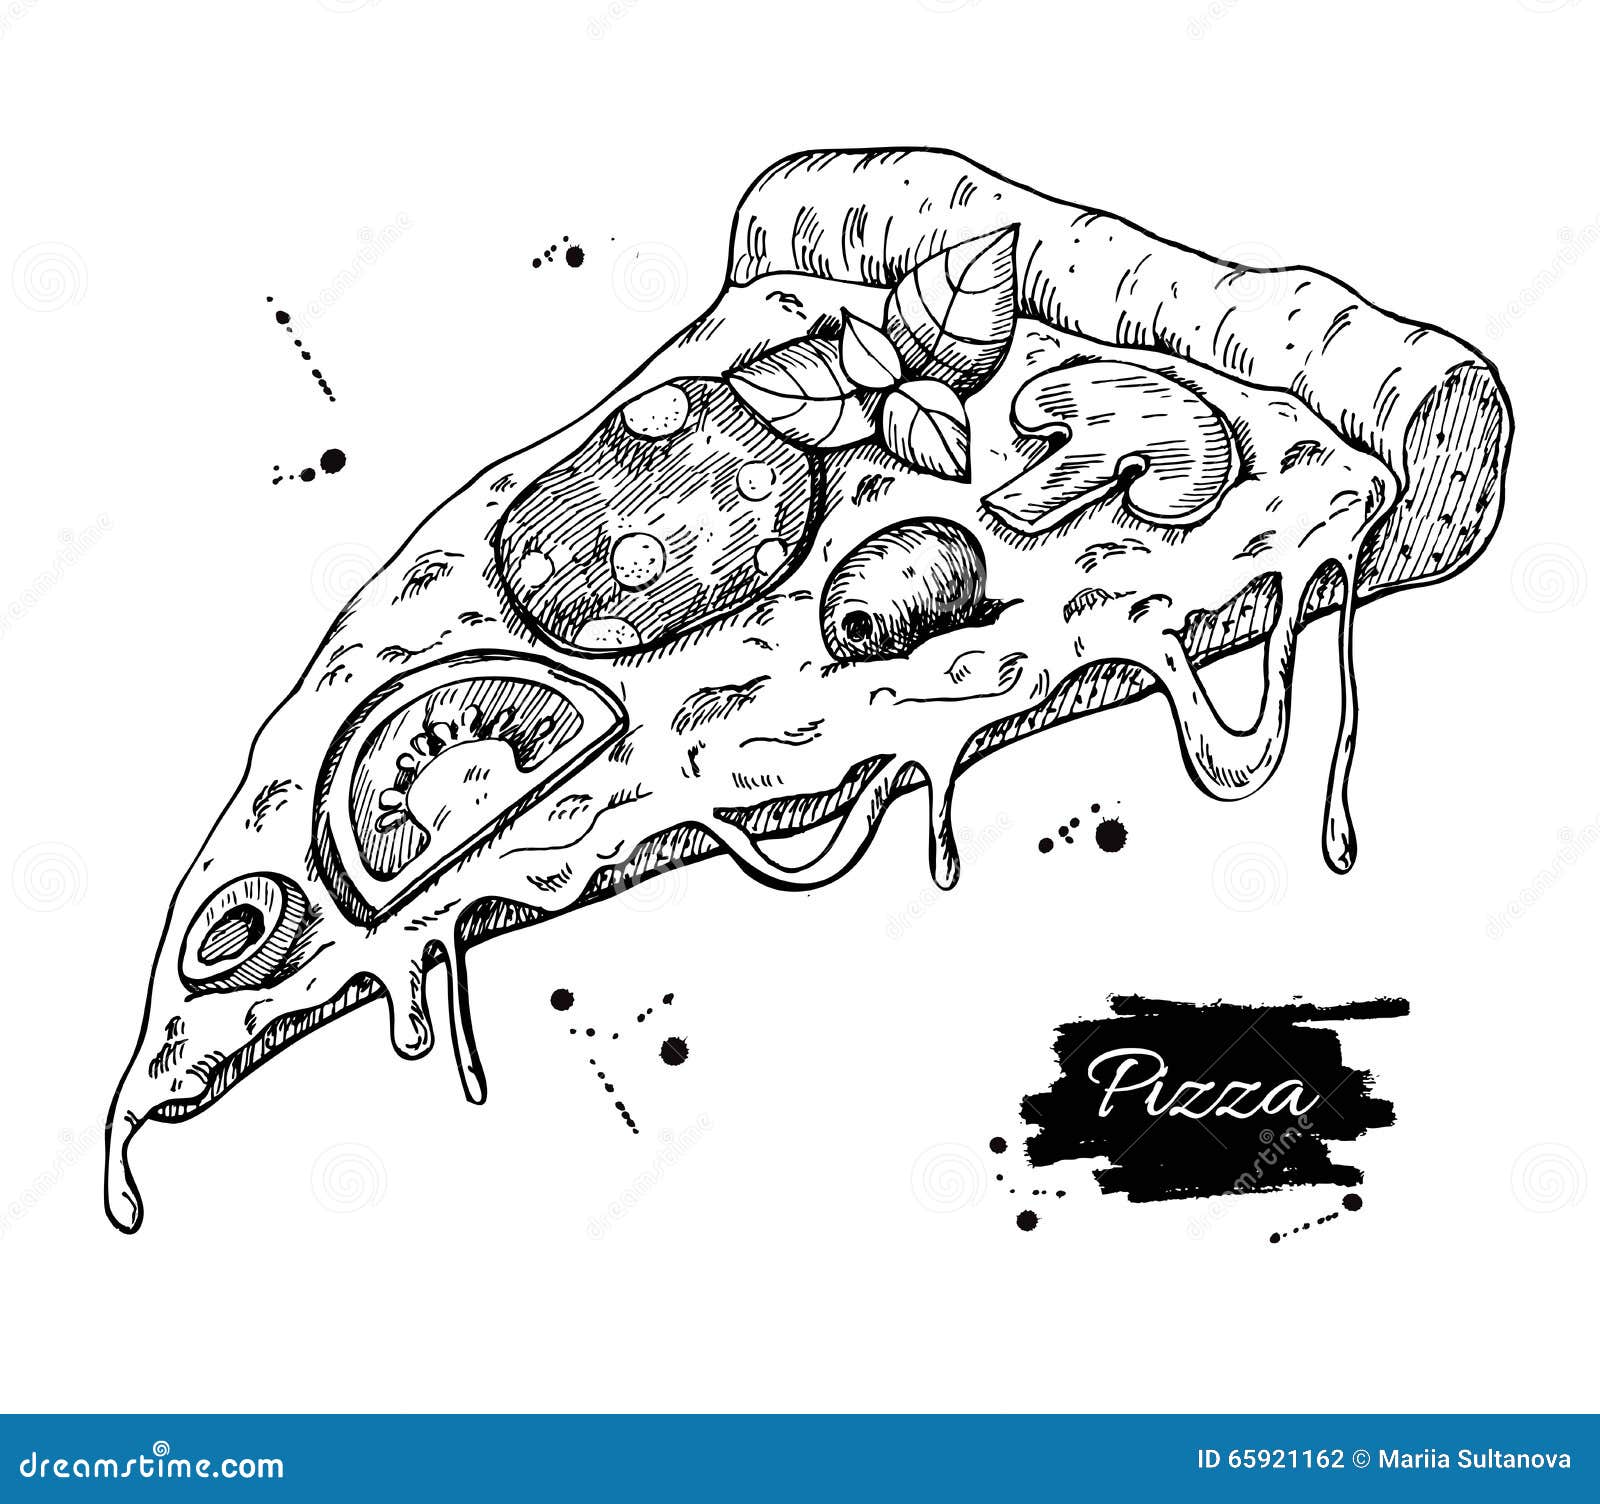 Premium Vector | Slice of pizza sketch hand drawn vintage doodle  illustration